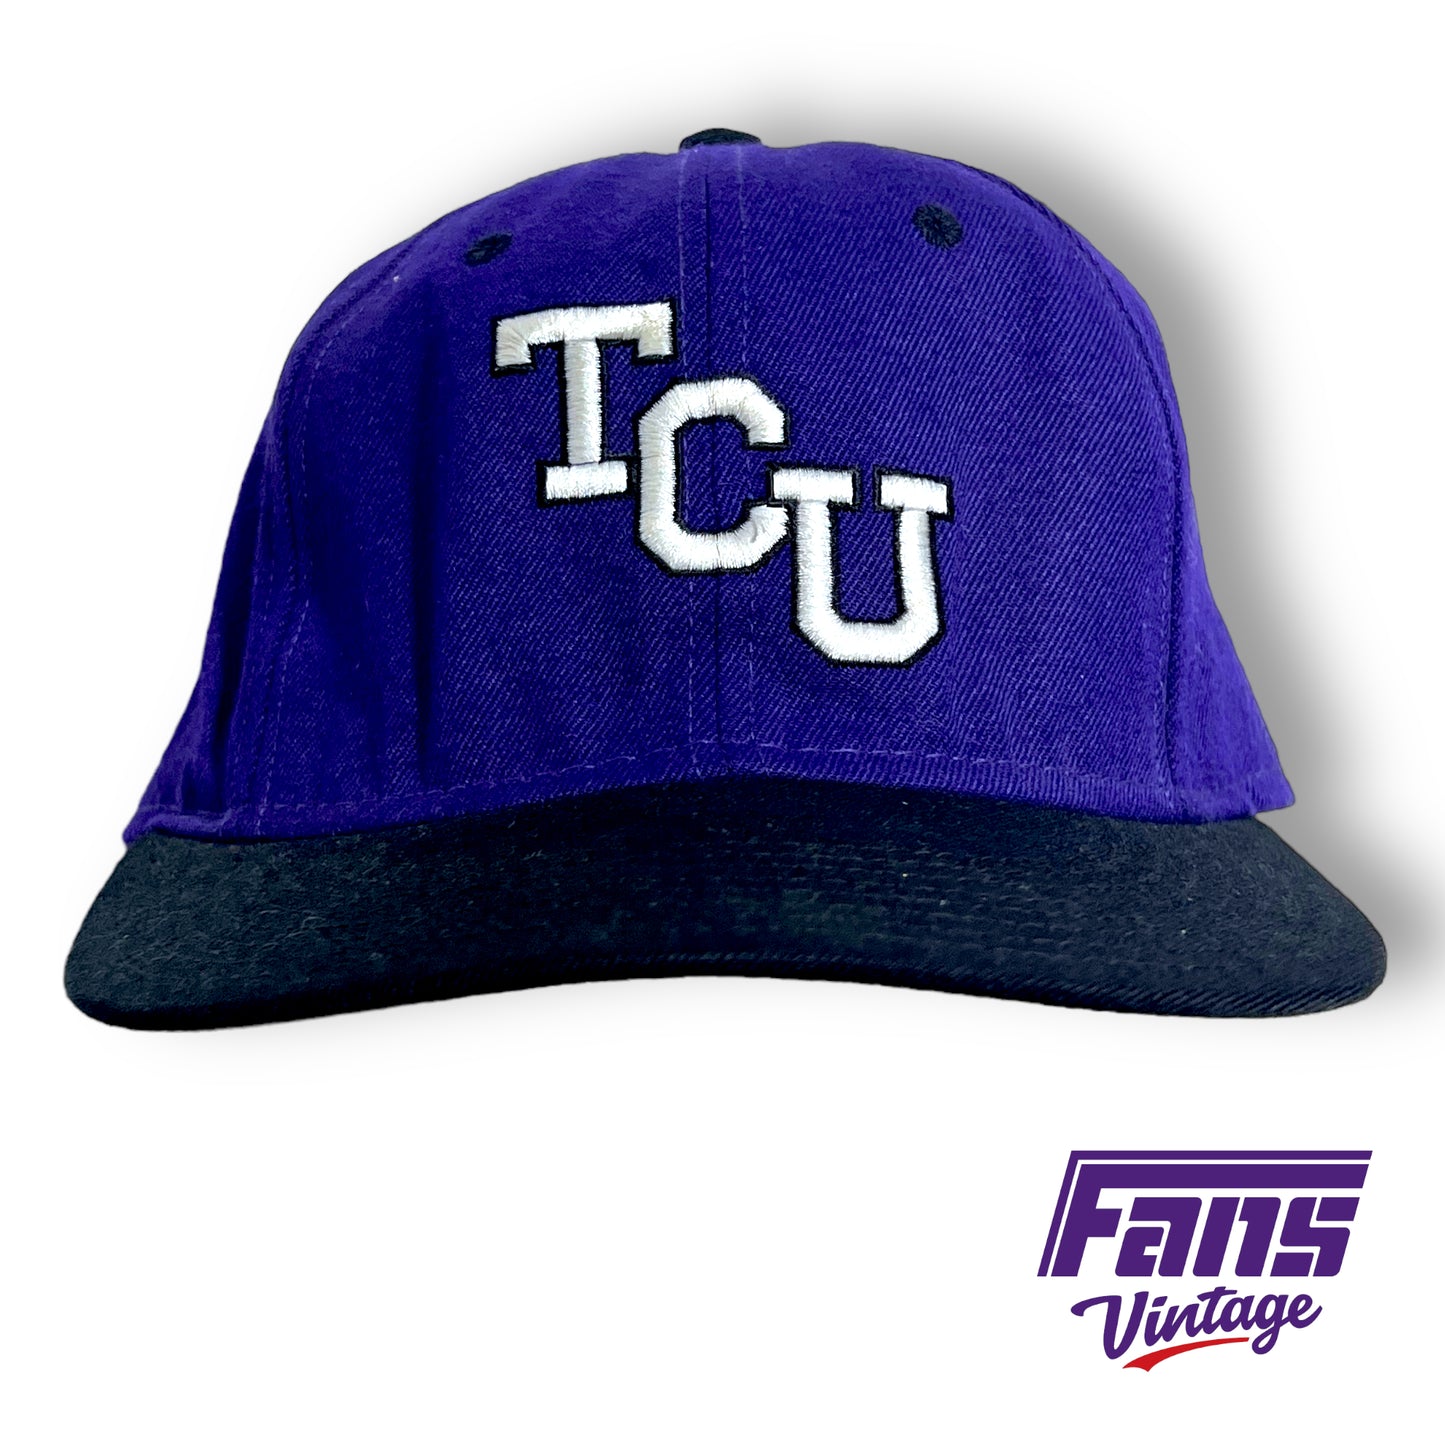 Vintage TCU baseball fitted hat